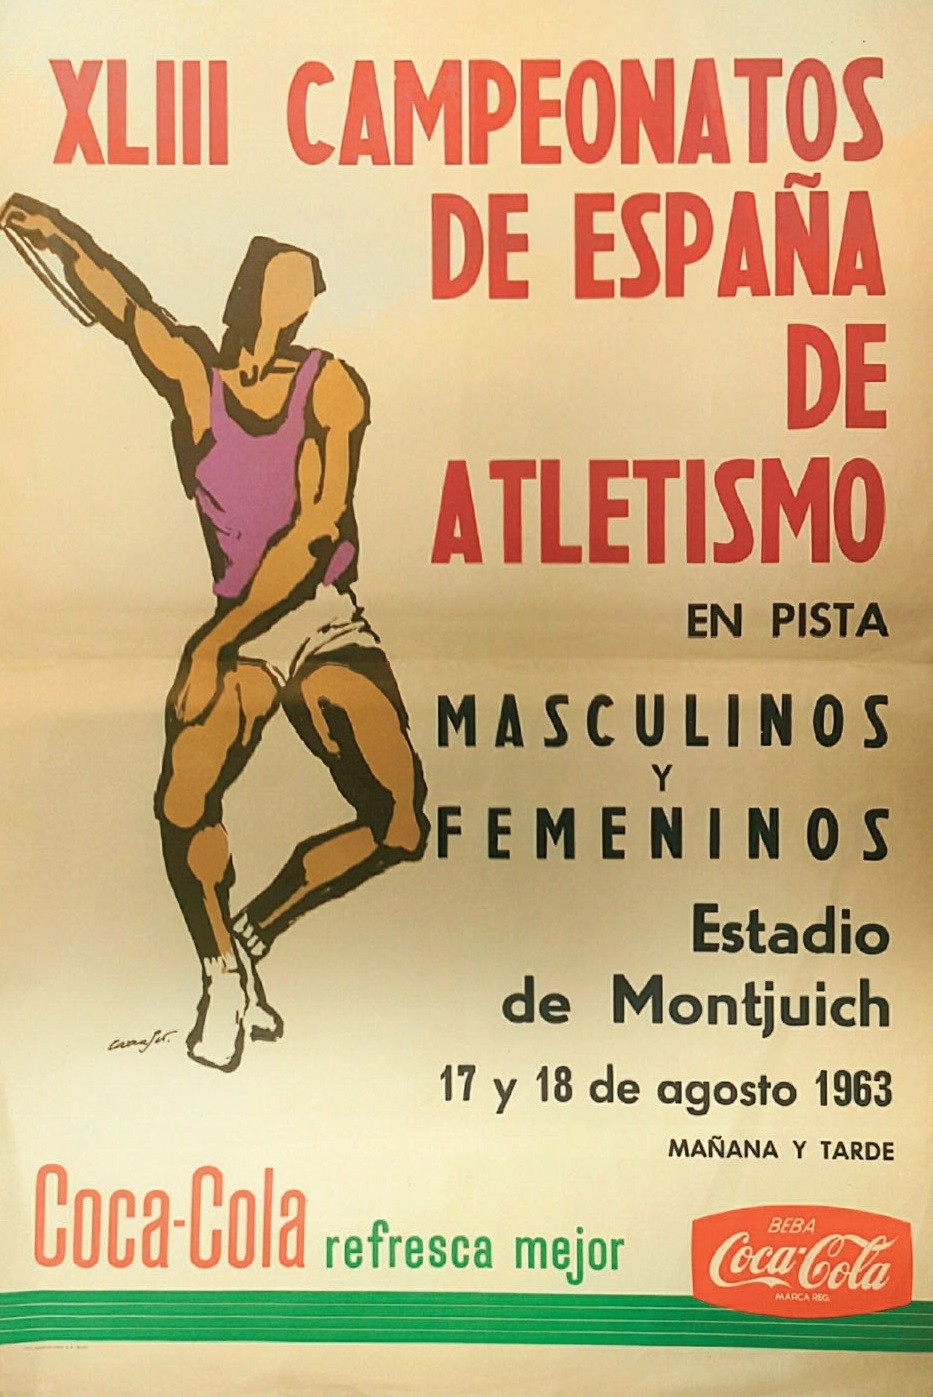 El cartel de la histórica cita de 1963